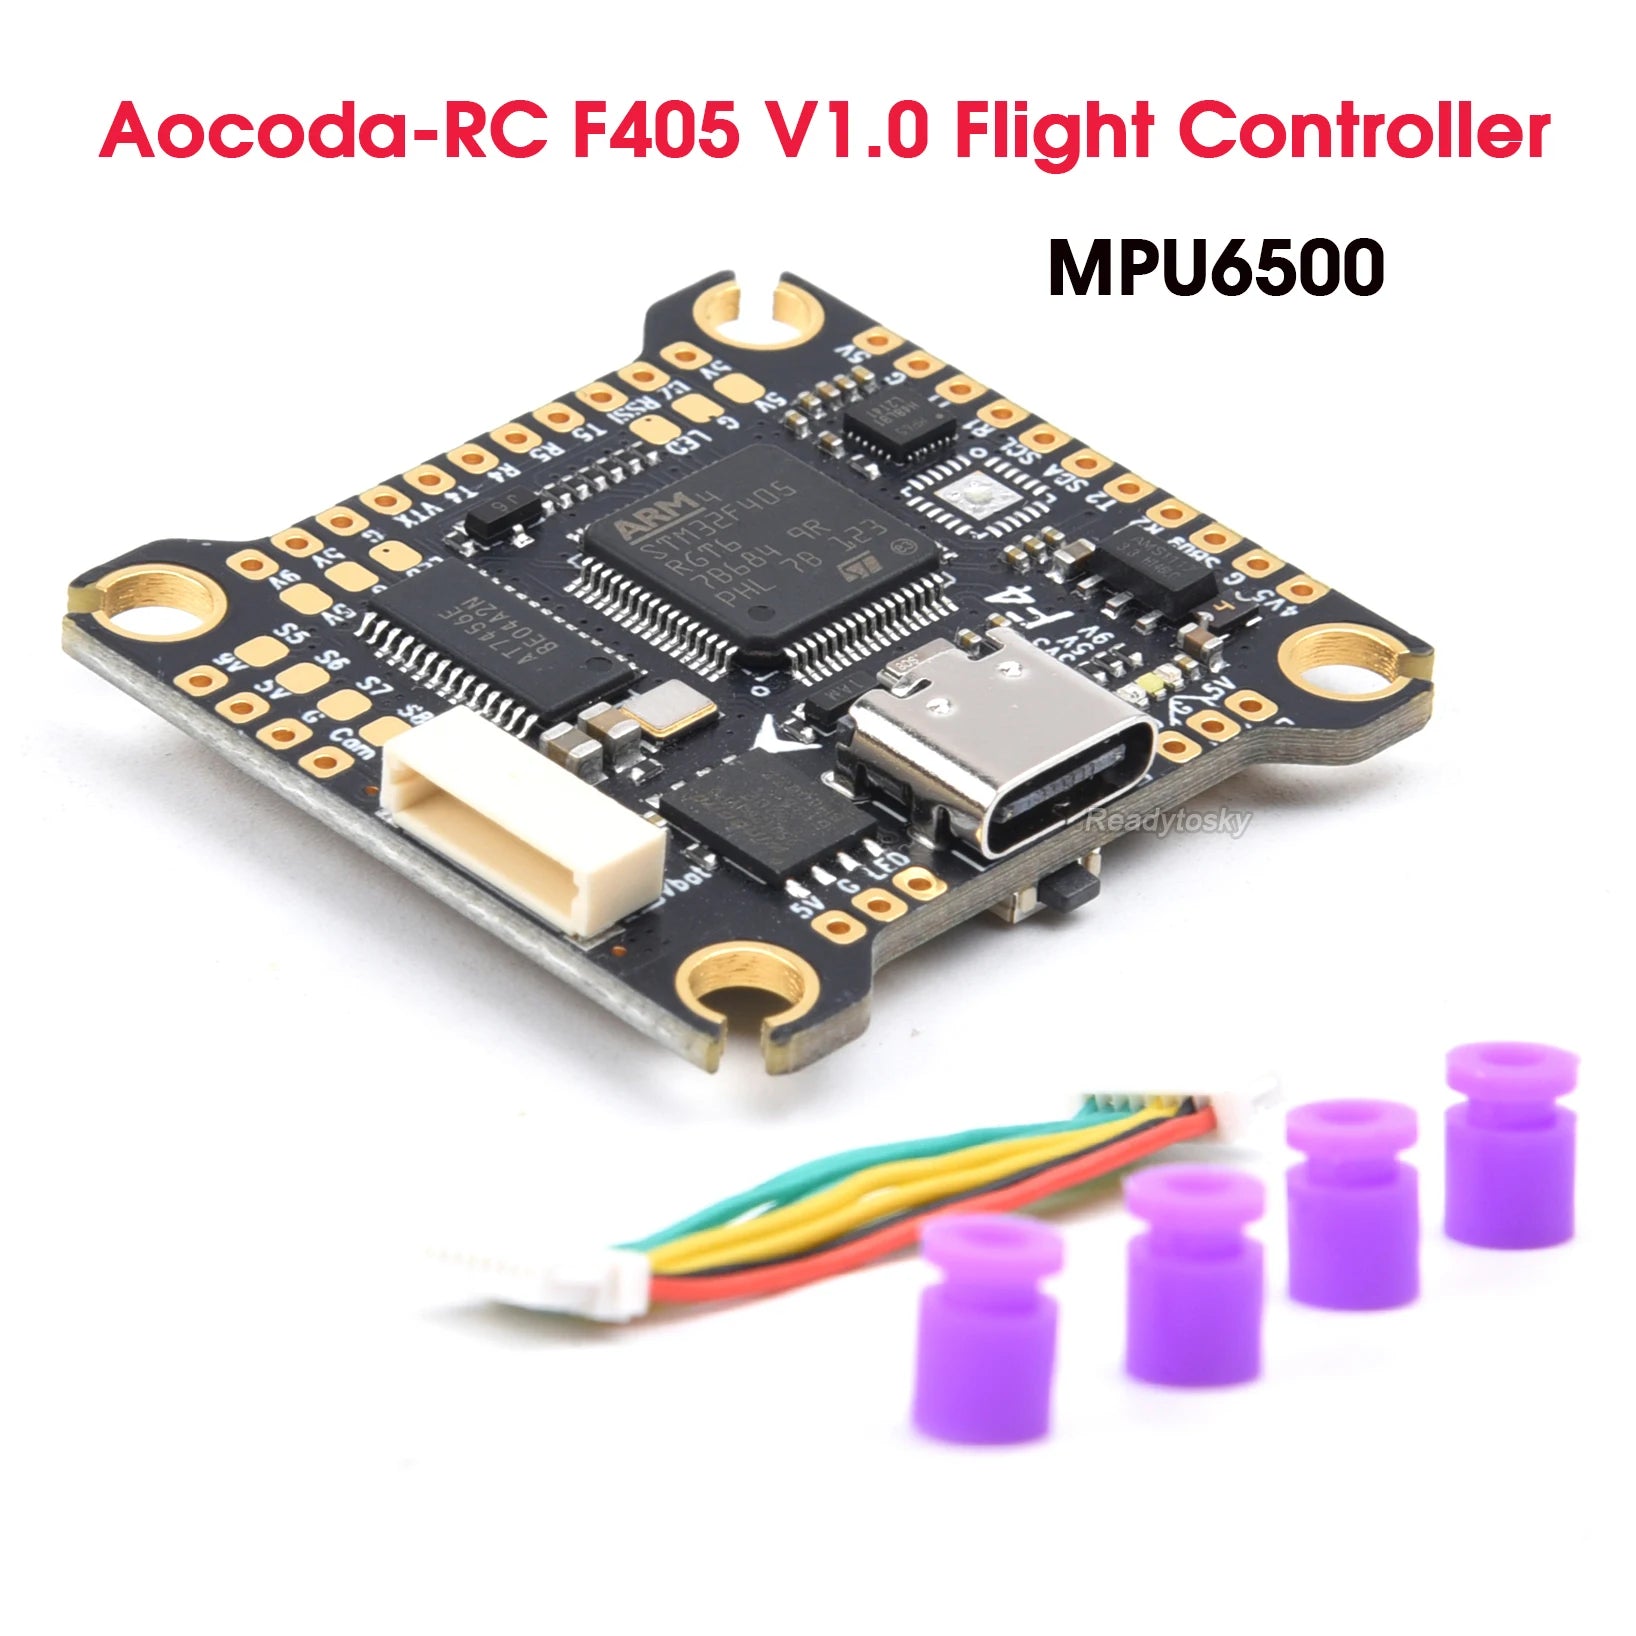 Aocoda-RC F405 V1.0 Flight Controller MPU65OO 